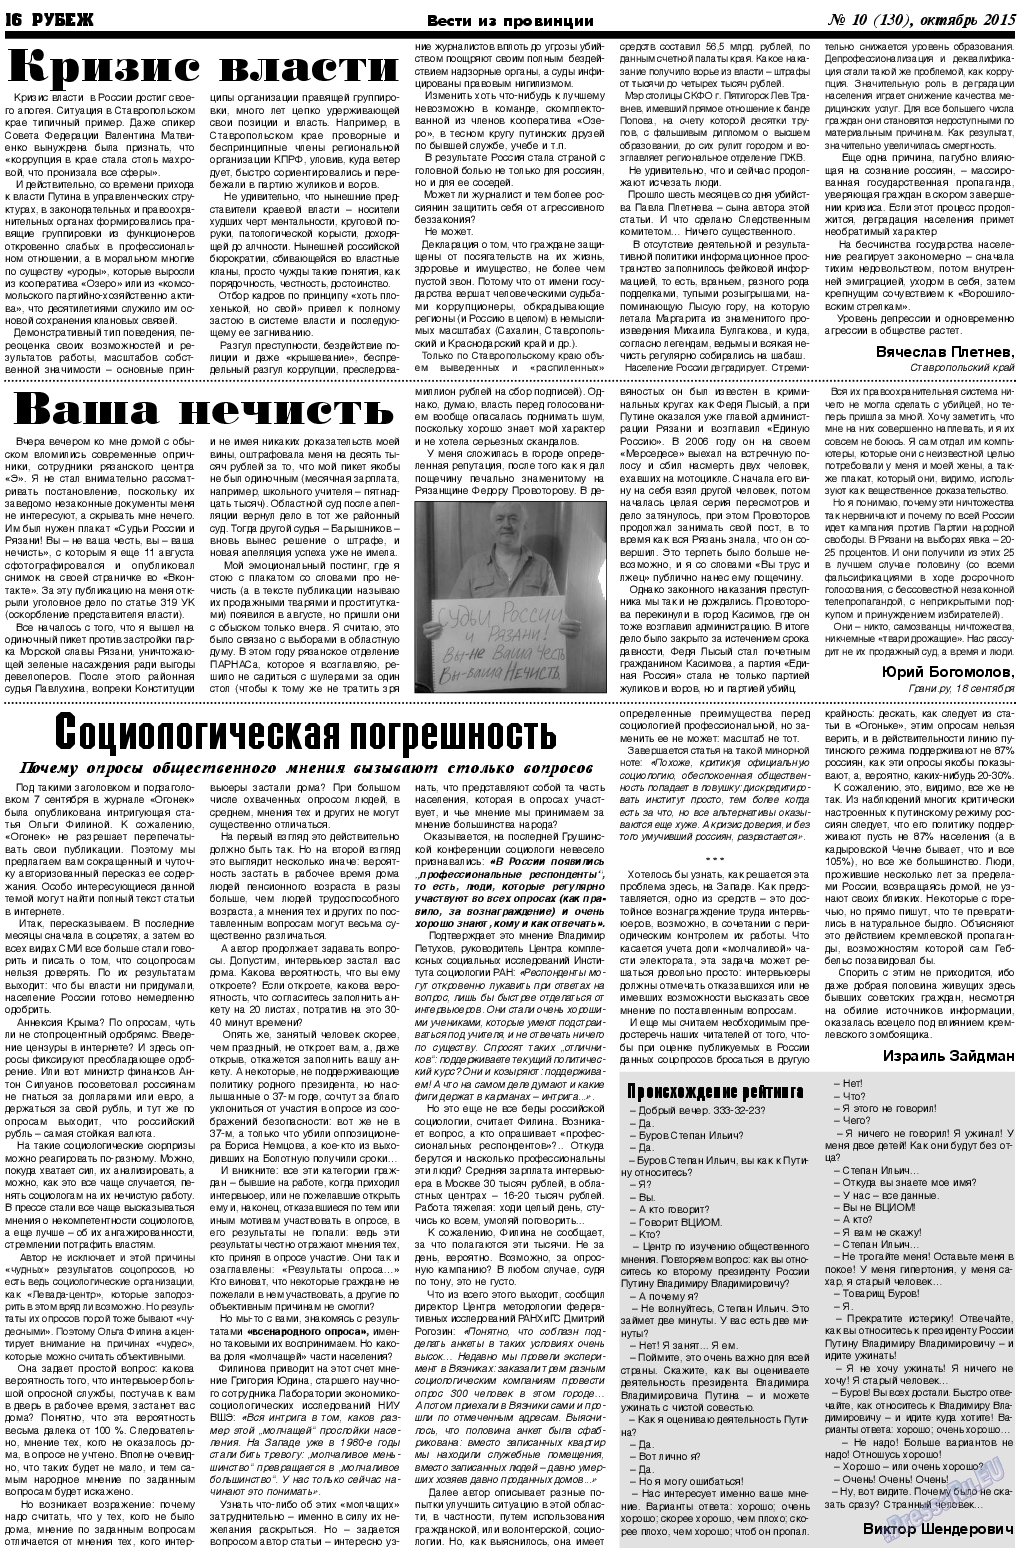 Рубеж, газета. 2015 №10 стр.16